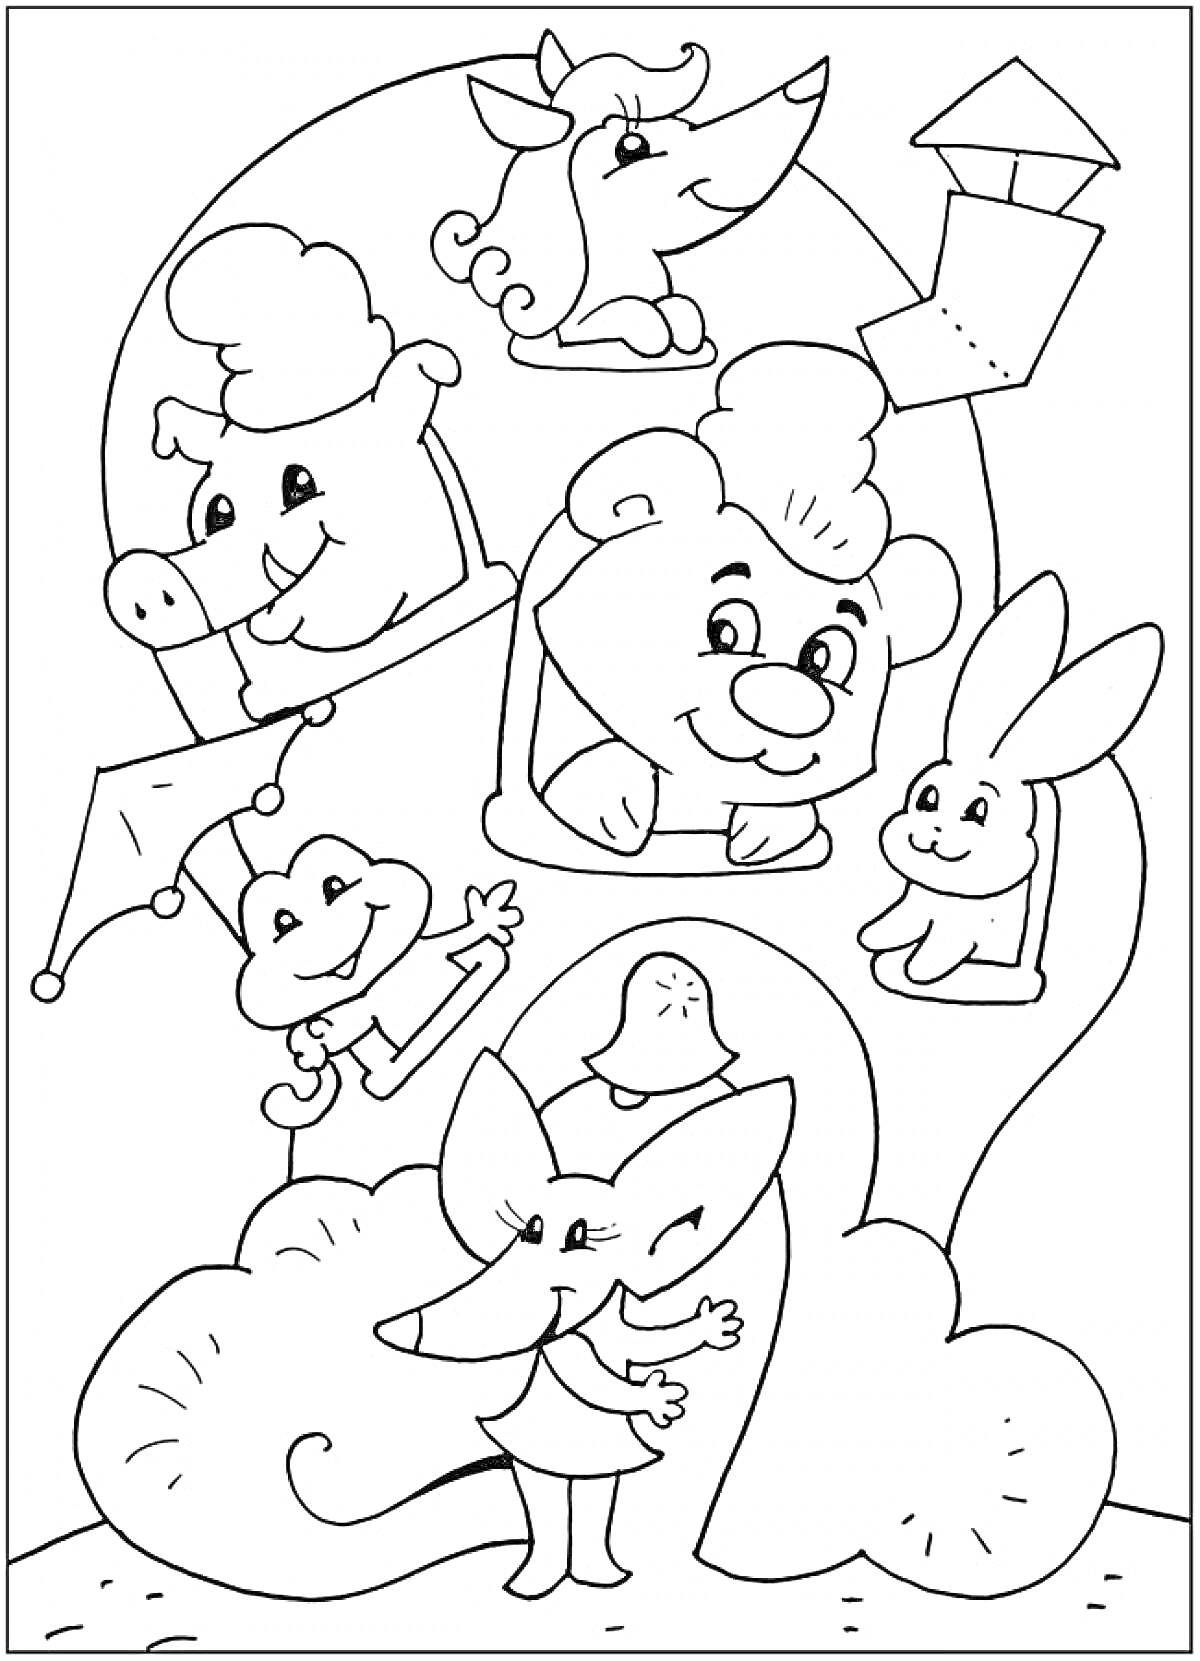 Раскраска Рукавичка с животными: лиса, кролик, медведь, лягушка, свинка и мышка